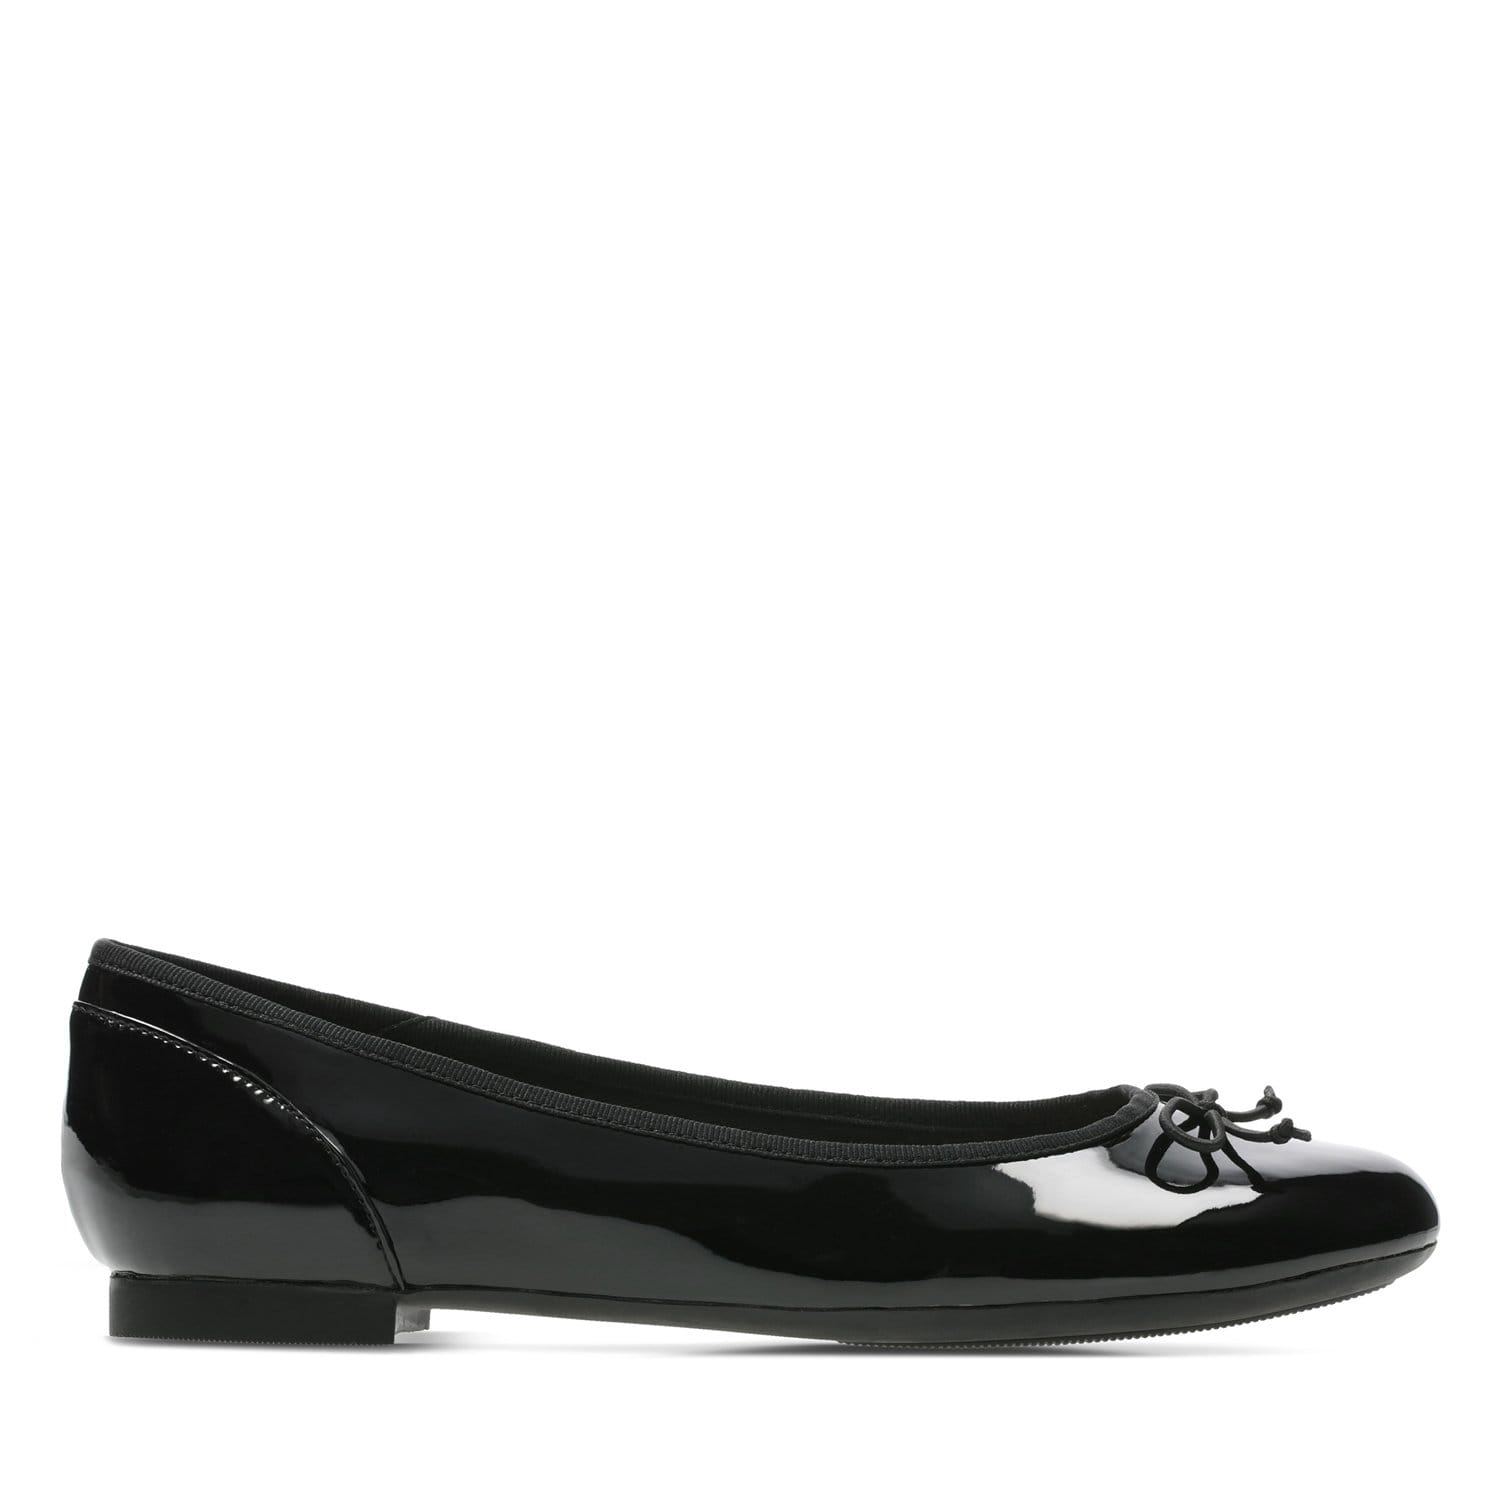 Clarks Couture Bloom  Shoes - Black Patent - 26115475 - D Width (Standard Fit)